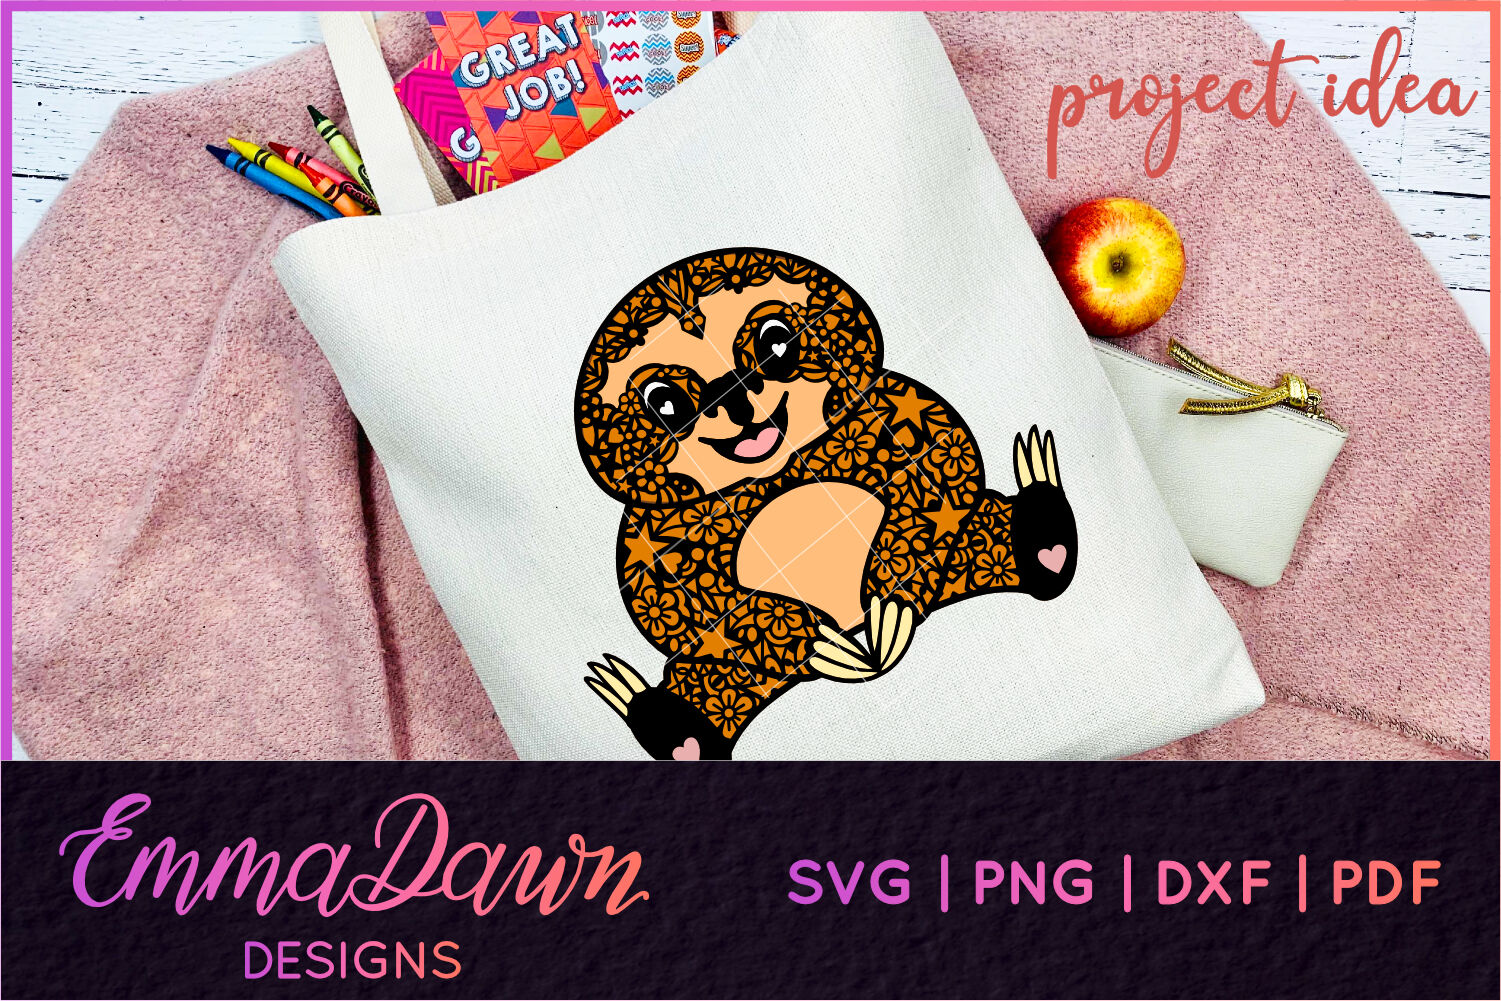 Download Phoebe The Sitting Sloth Mandala Zentangle Design Svg By Emma Dawn Designs Thehungryjpeg Com